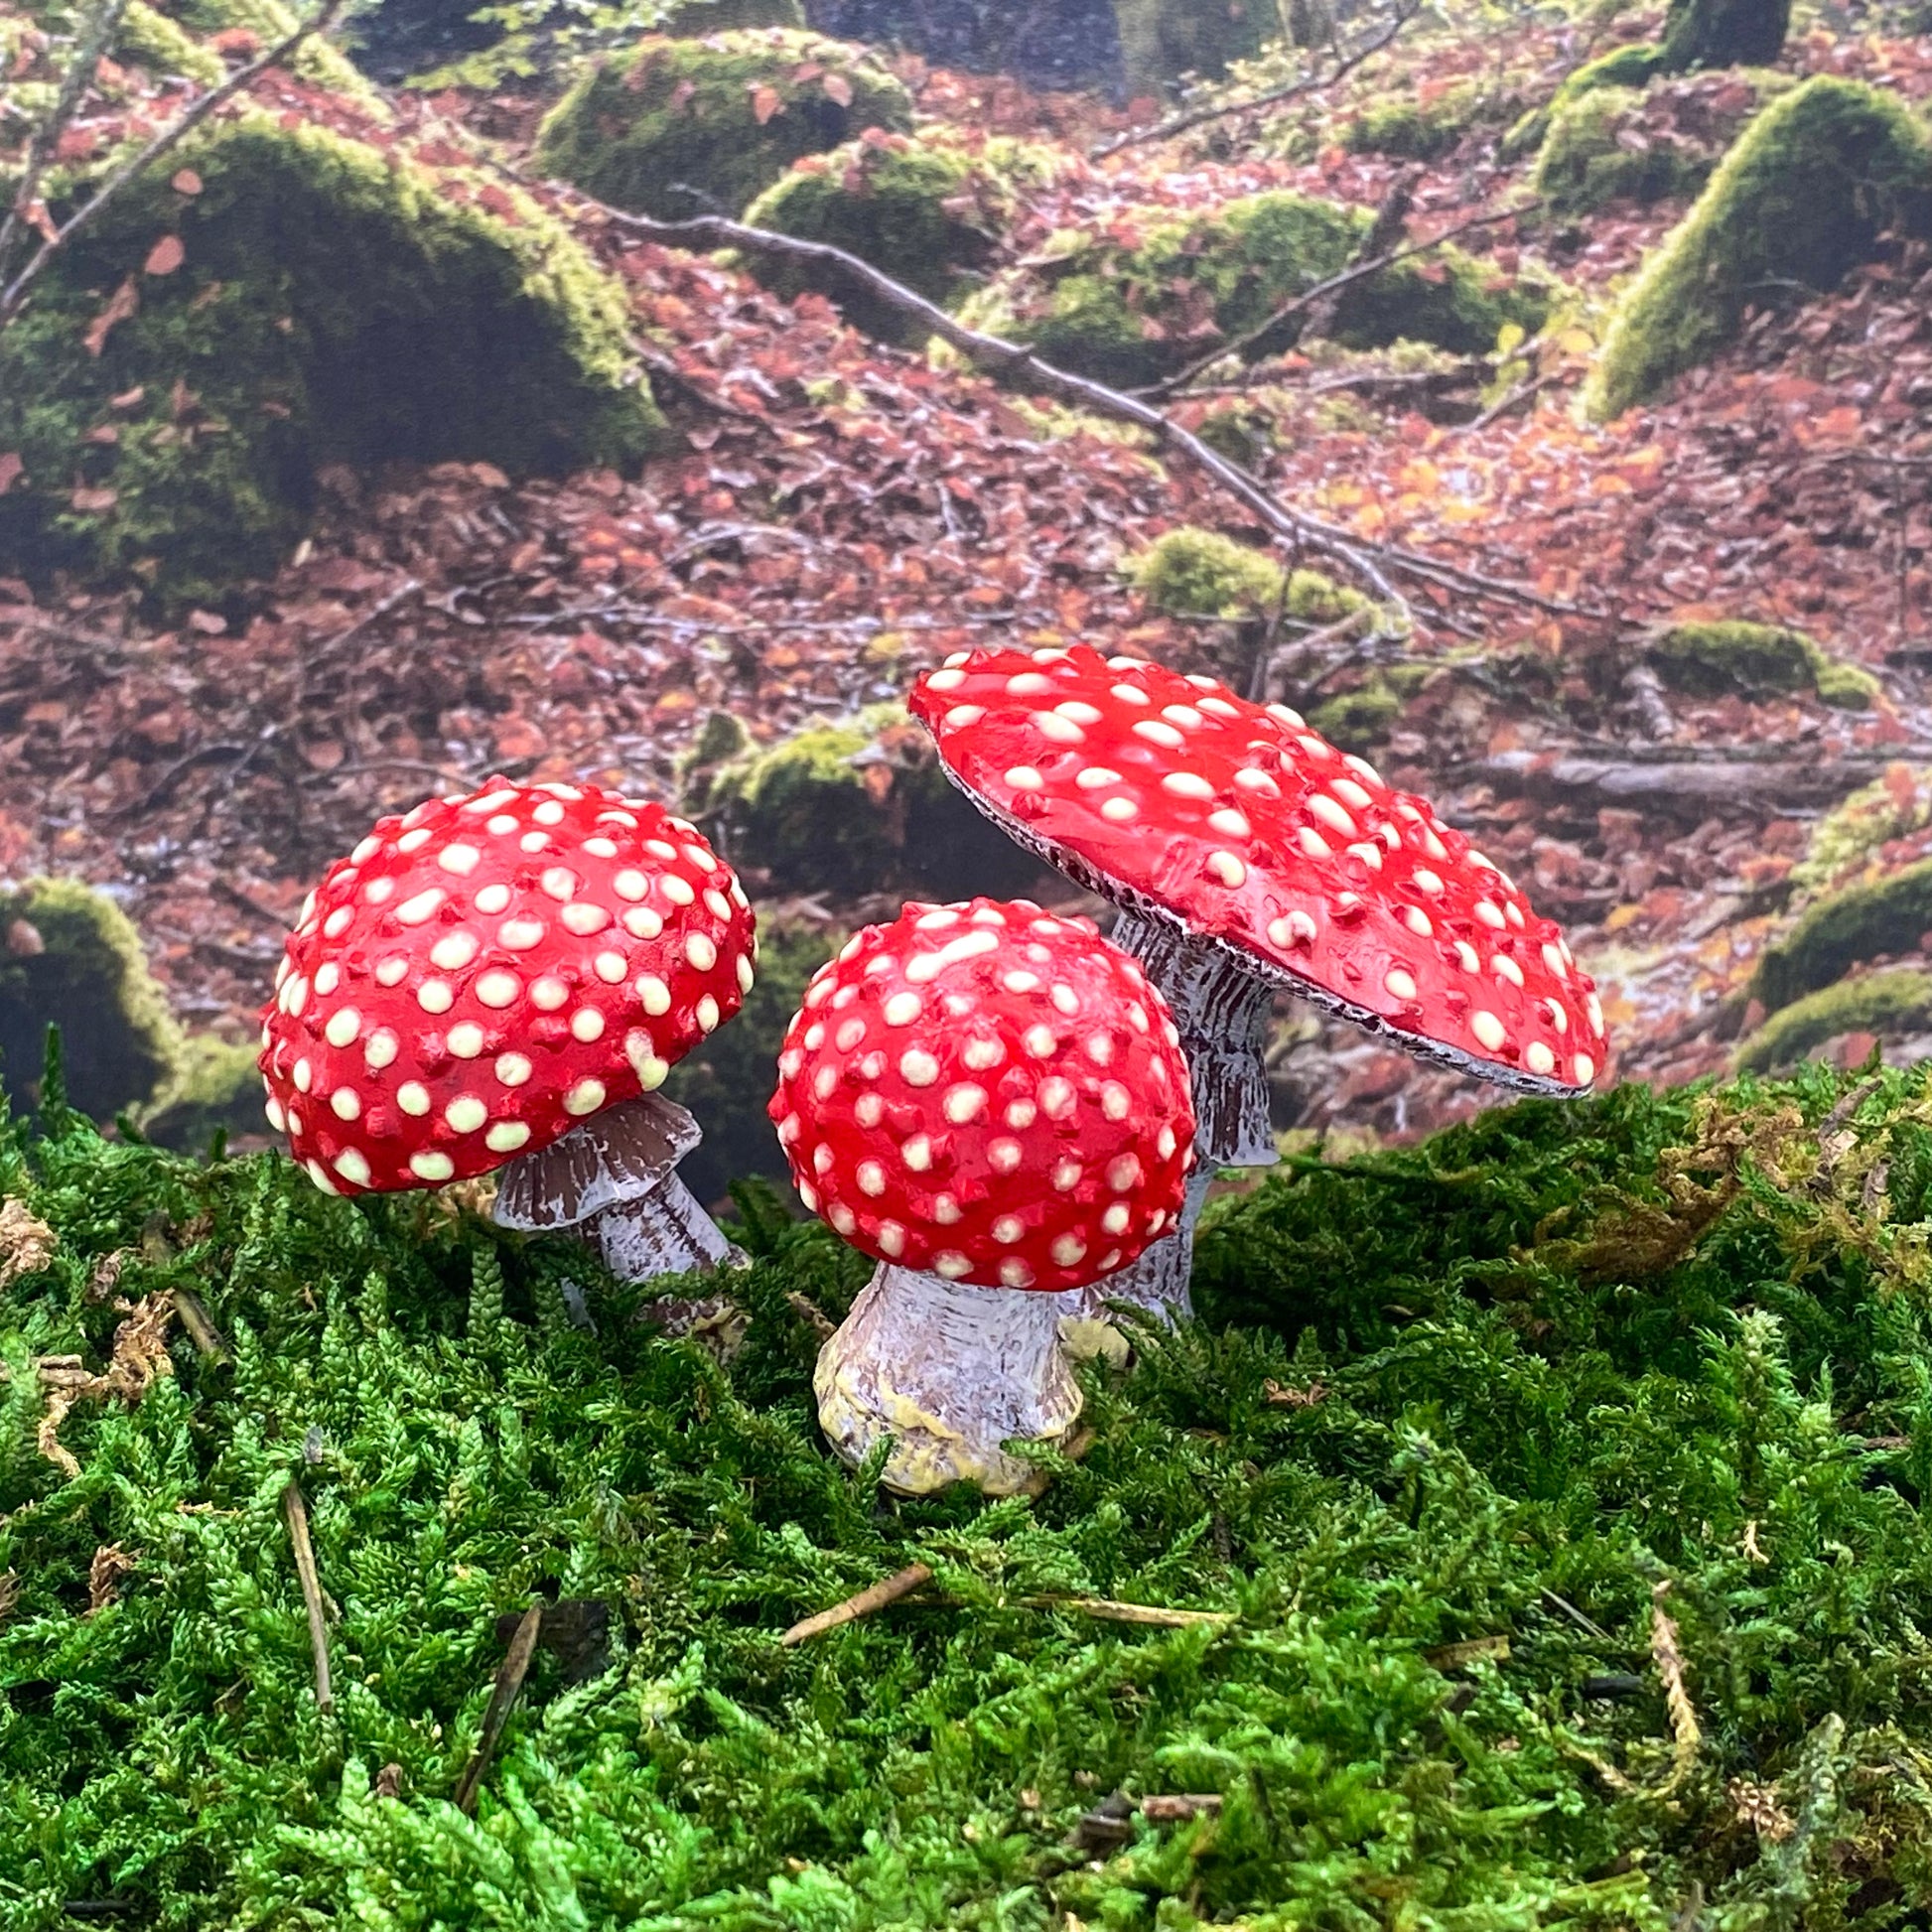 Glow In The Dark Forest Amanita Mushrooms, Australian Fairy Gardens, Mushrooms